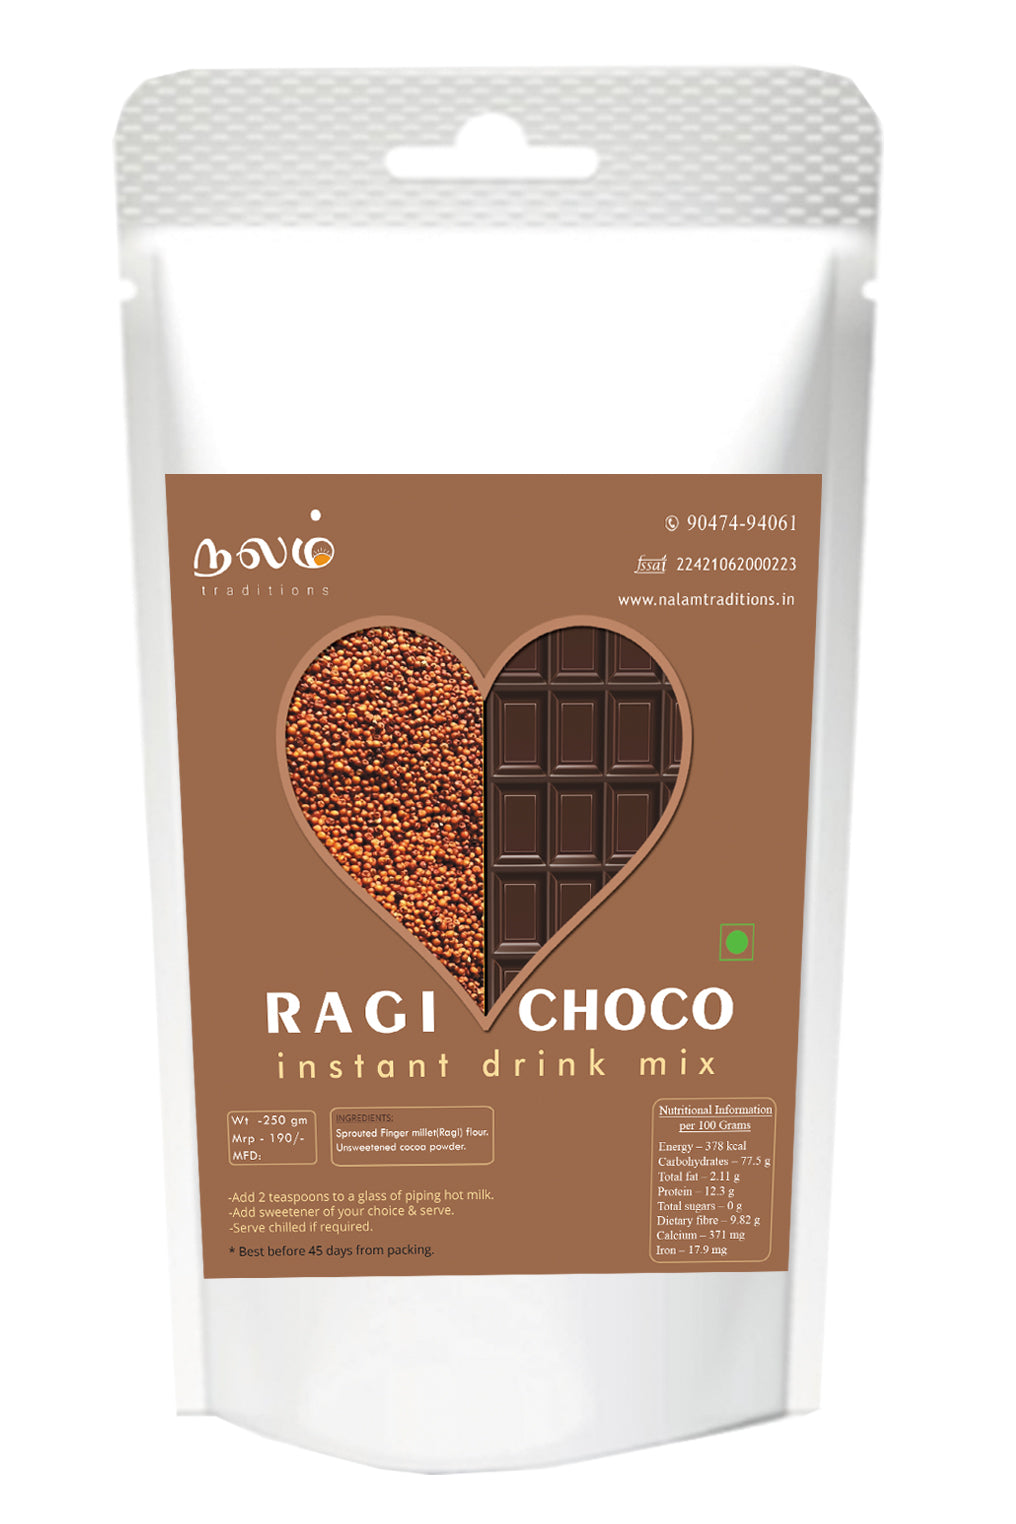 Ragi Choco Instant drink mix